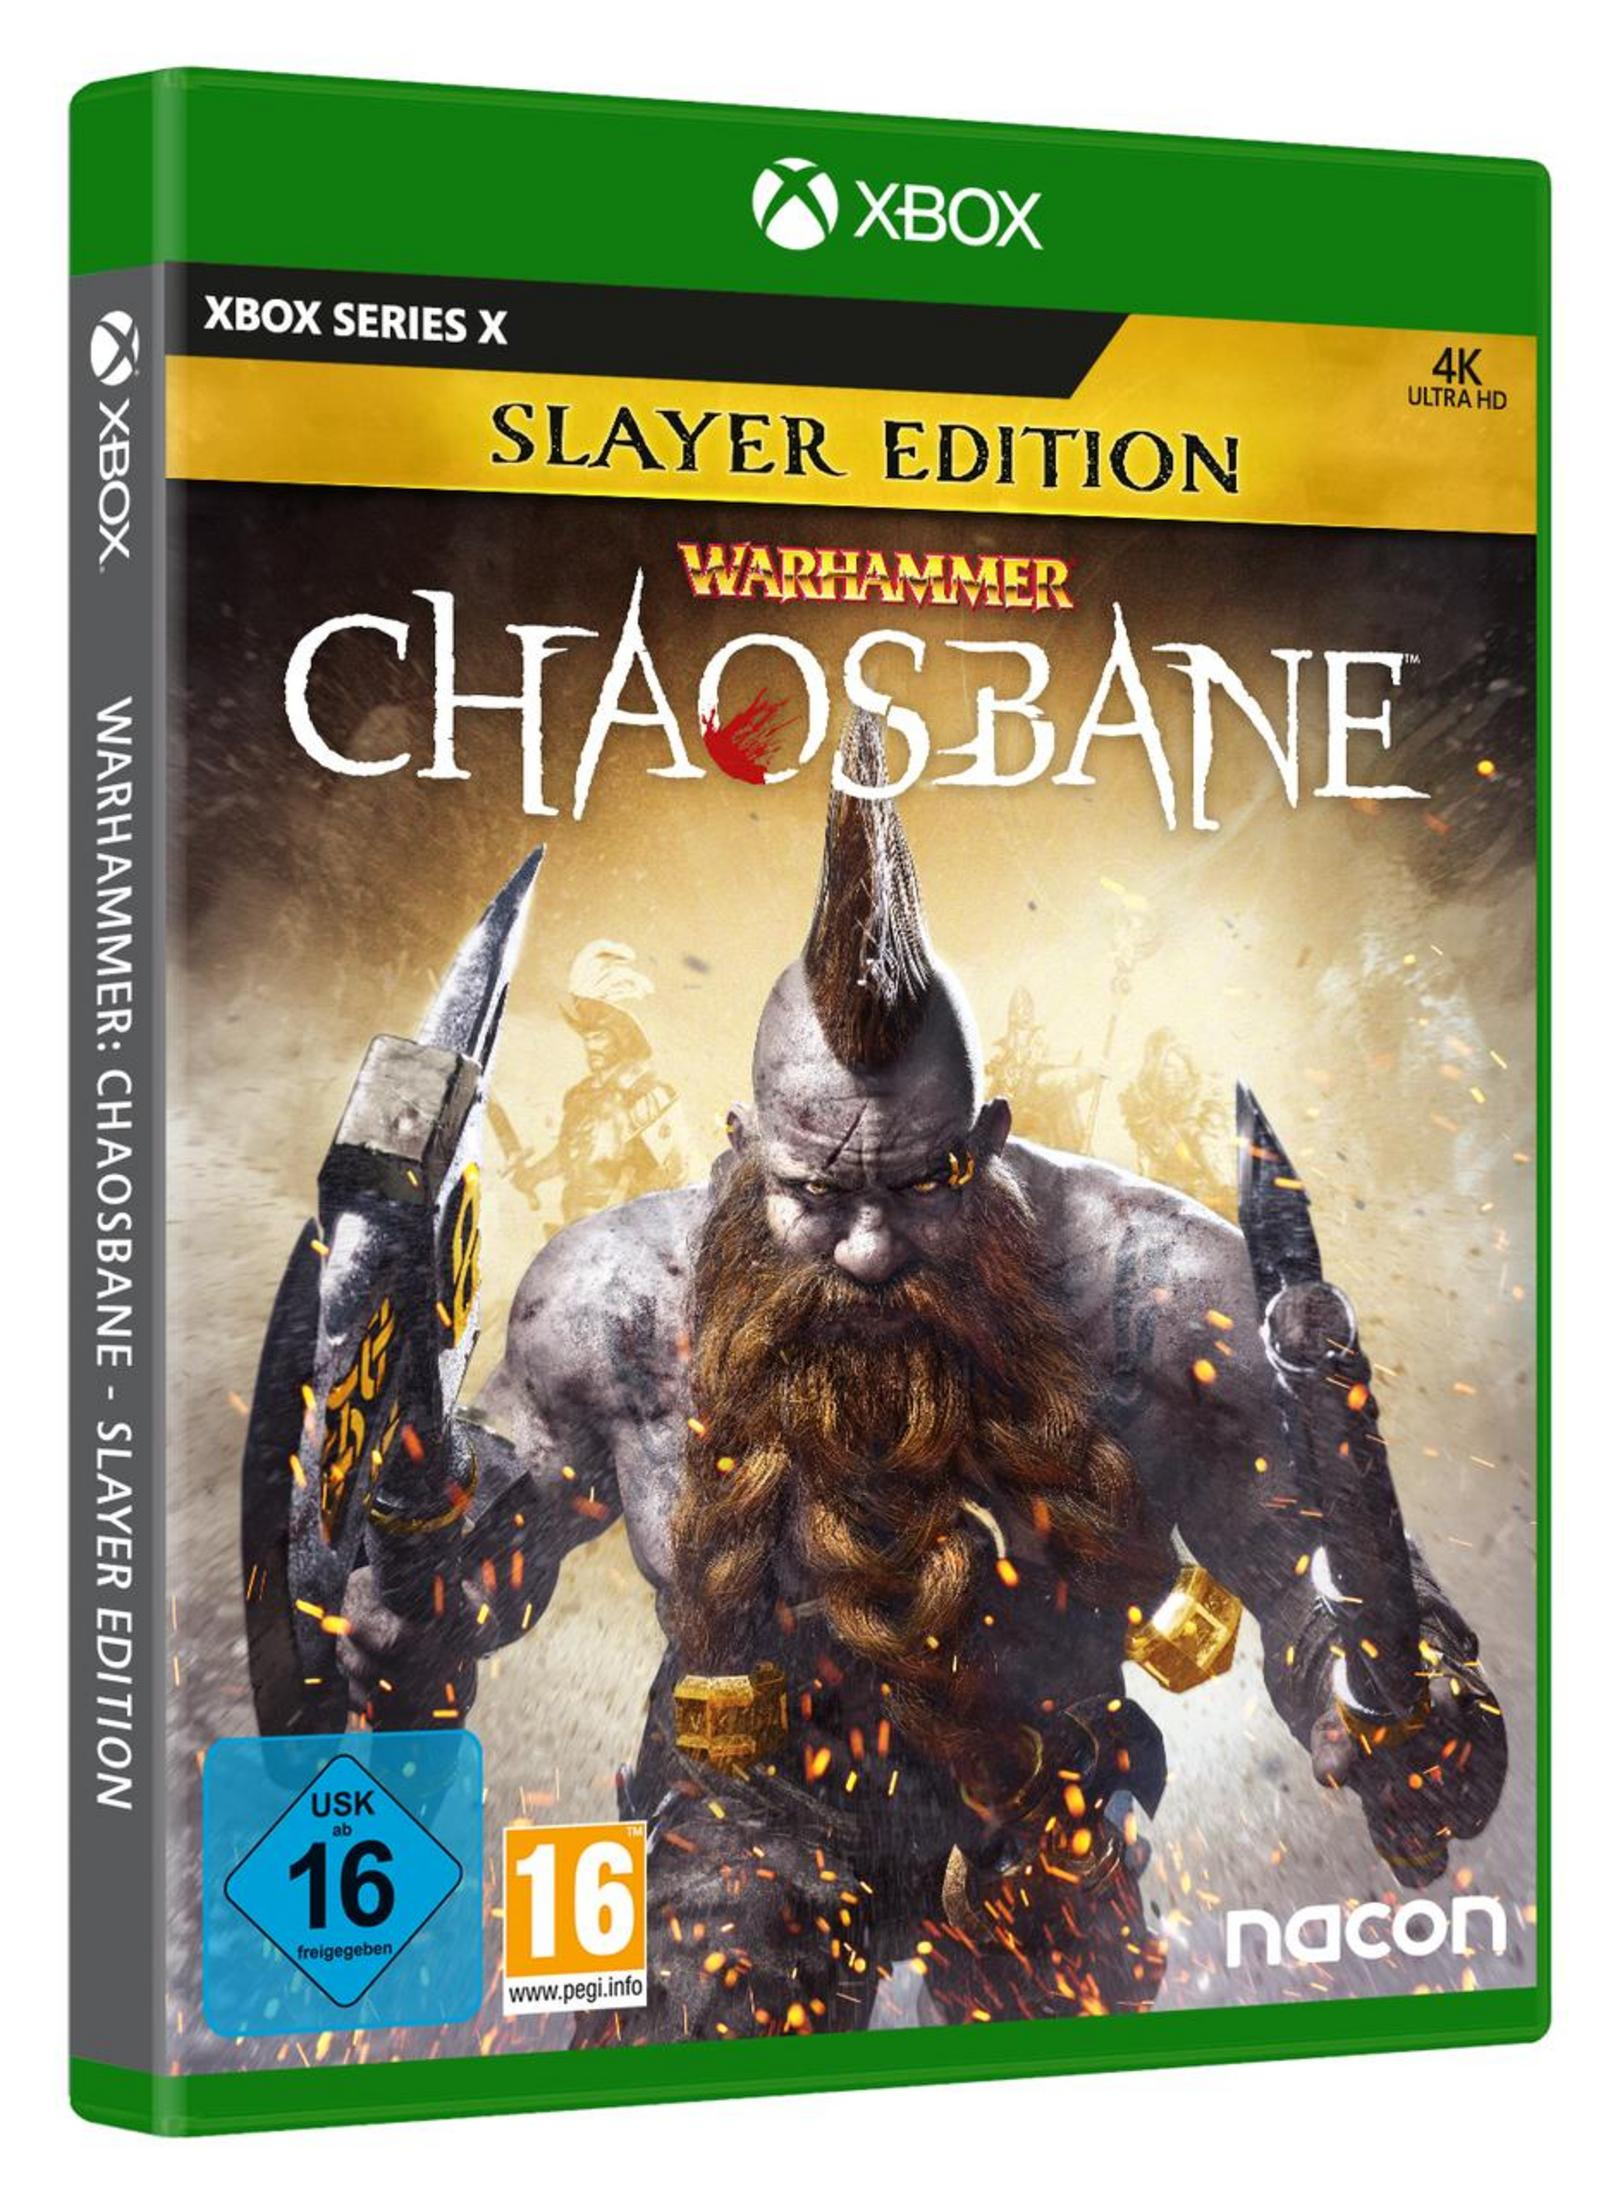 Warhammer Chaosbane XBSX Slayer Edition - X|S] [Xbox Series